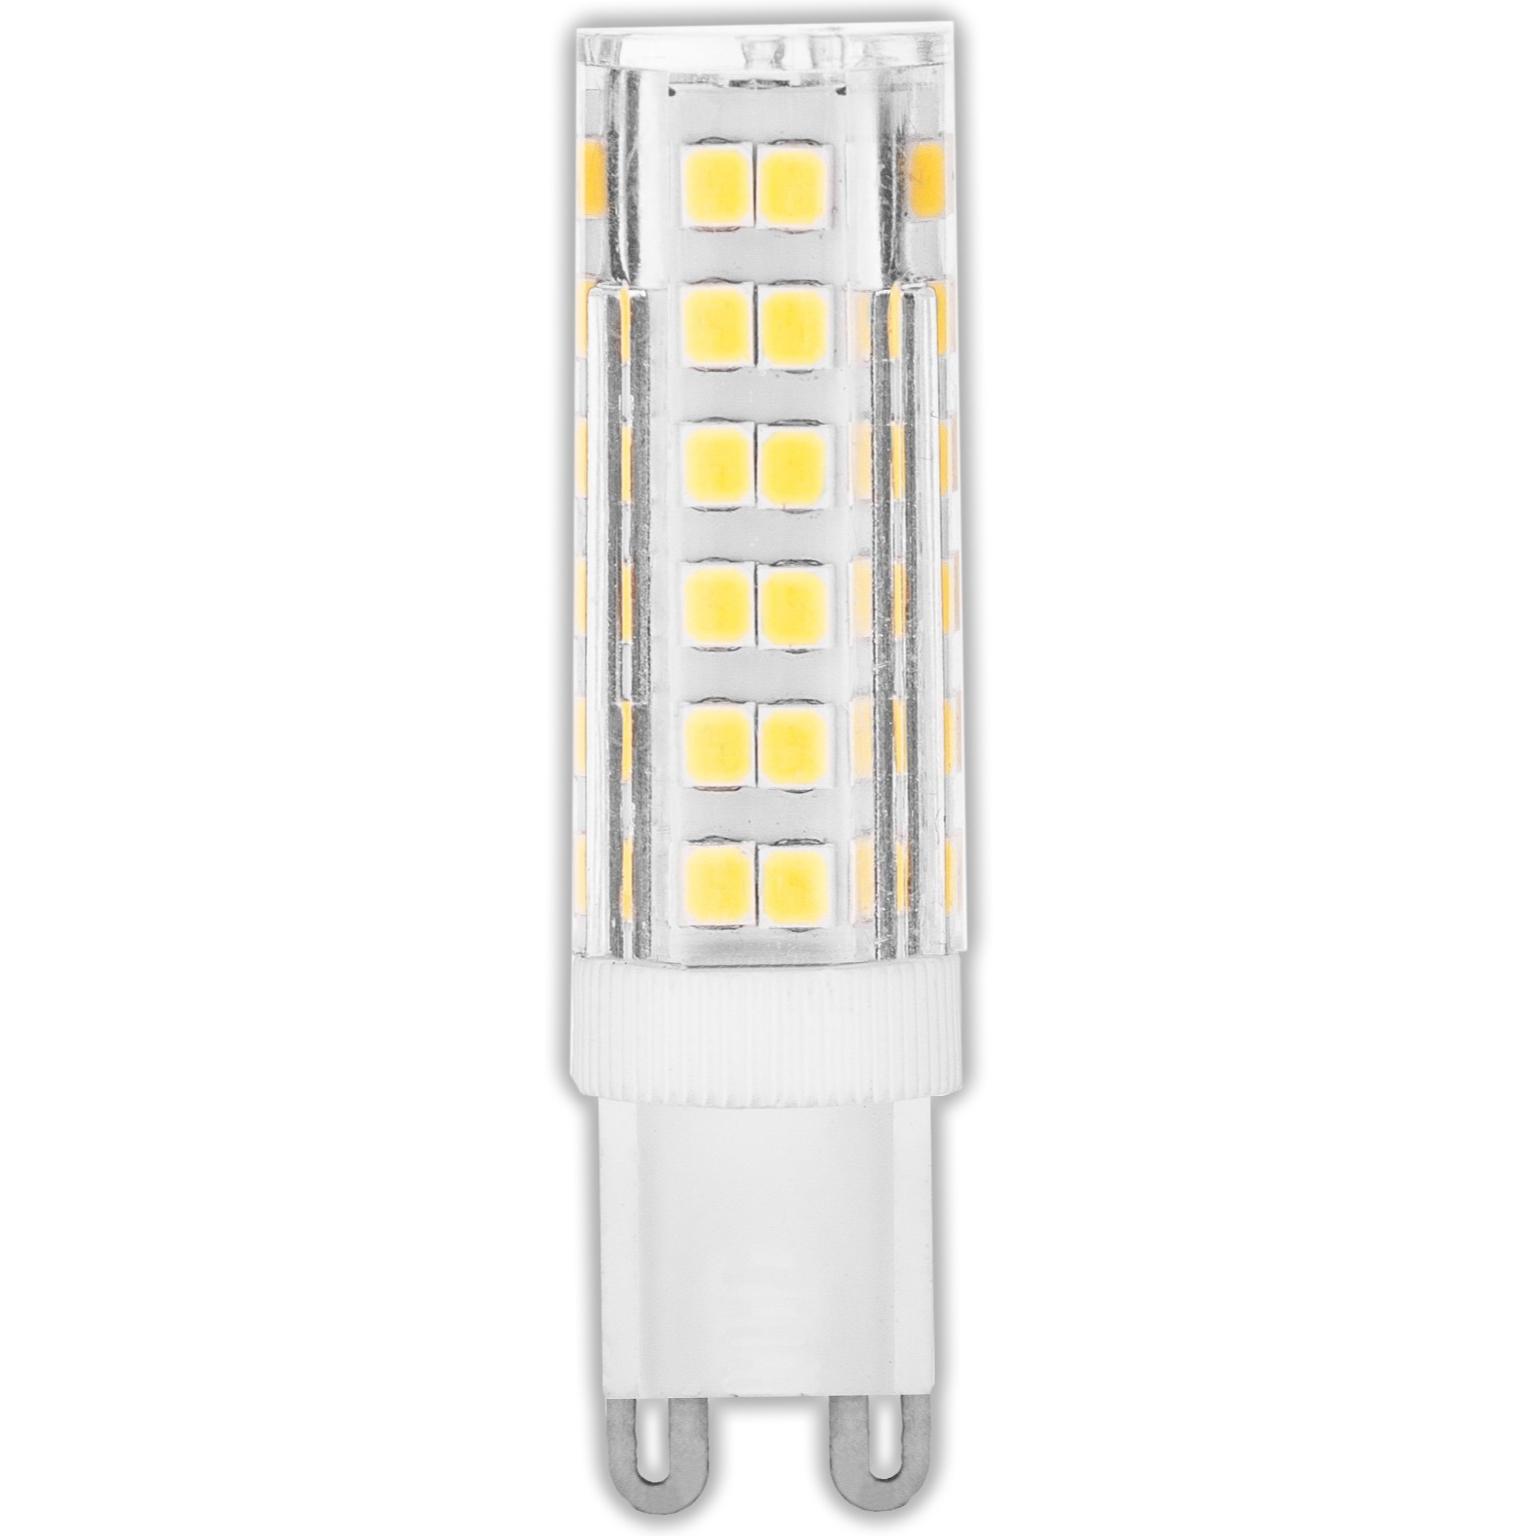 G9 Lamp led Winkel: Bestel goedkoop uw G9 led